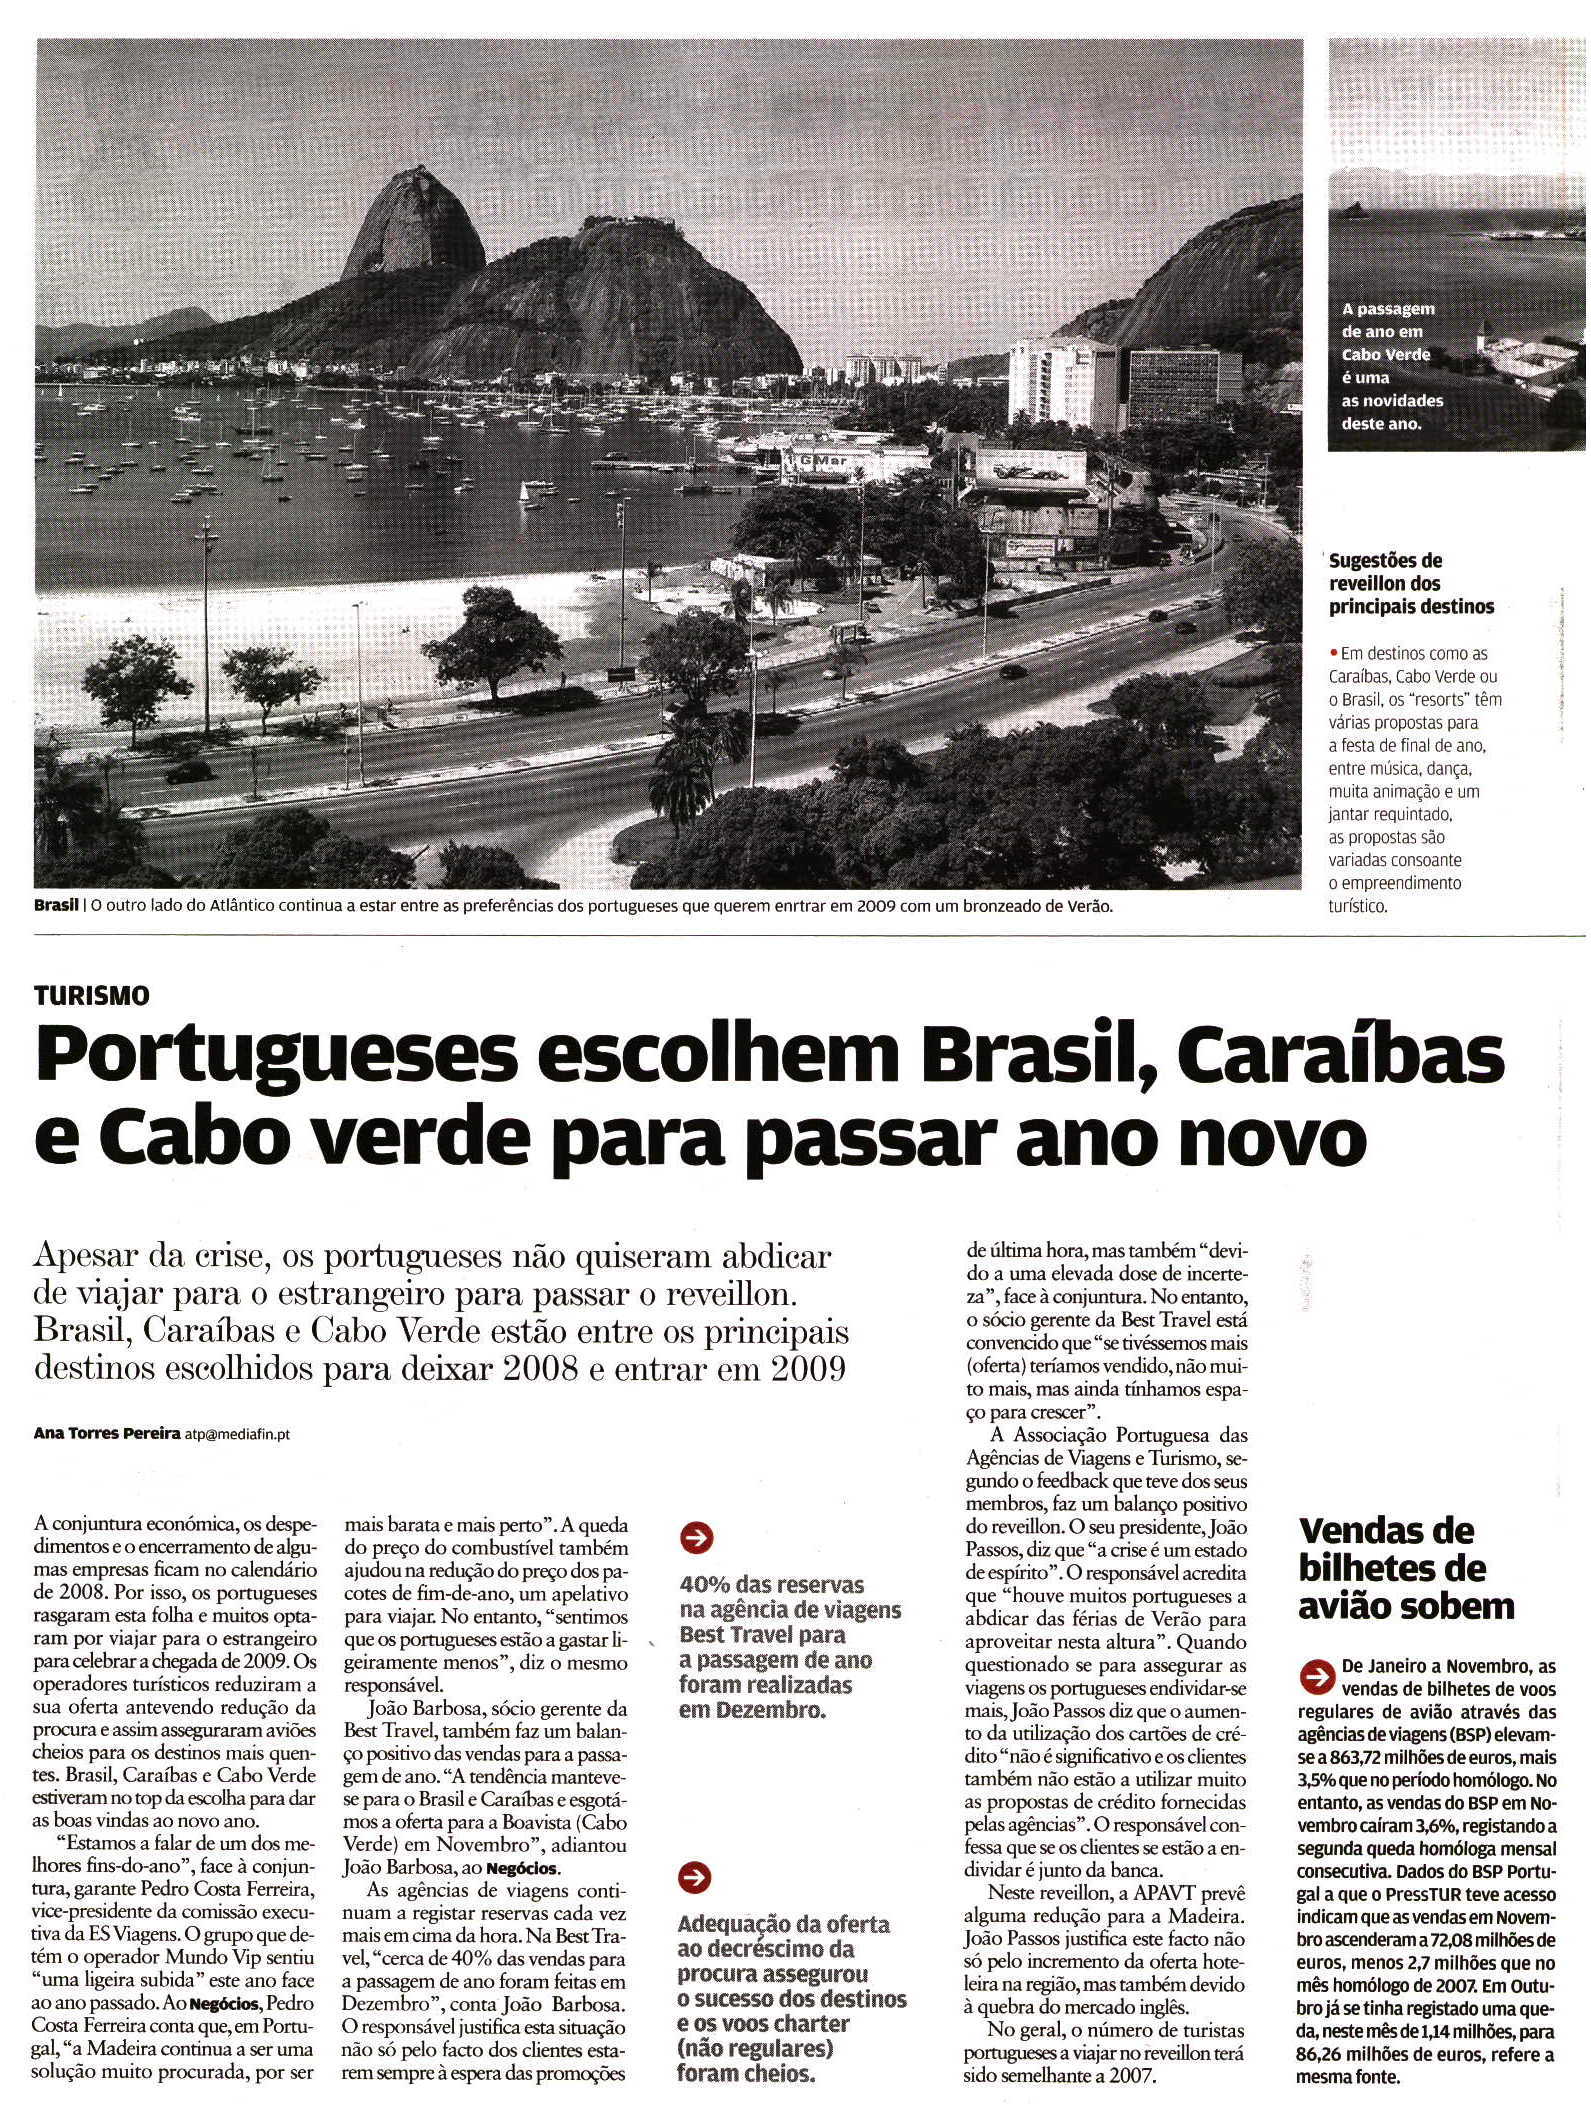 ID: 23287322 31-12-2008 Tiragem: 18523 País: Portugal Period.